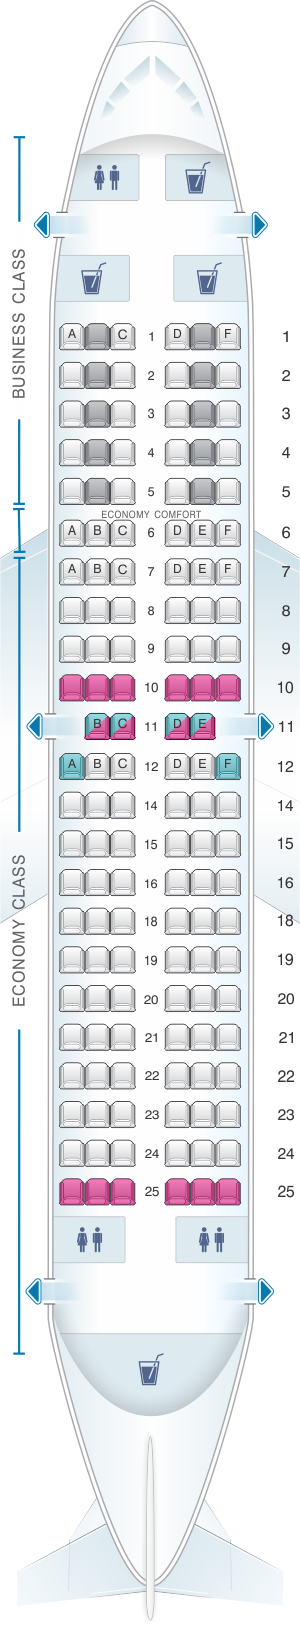 Klm Airplane Seating Chart